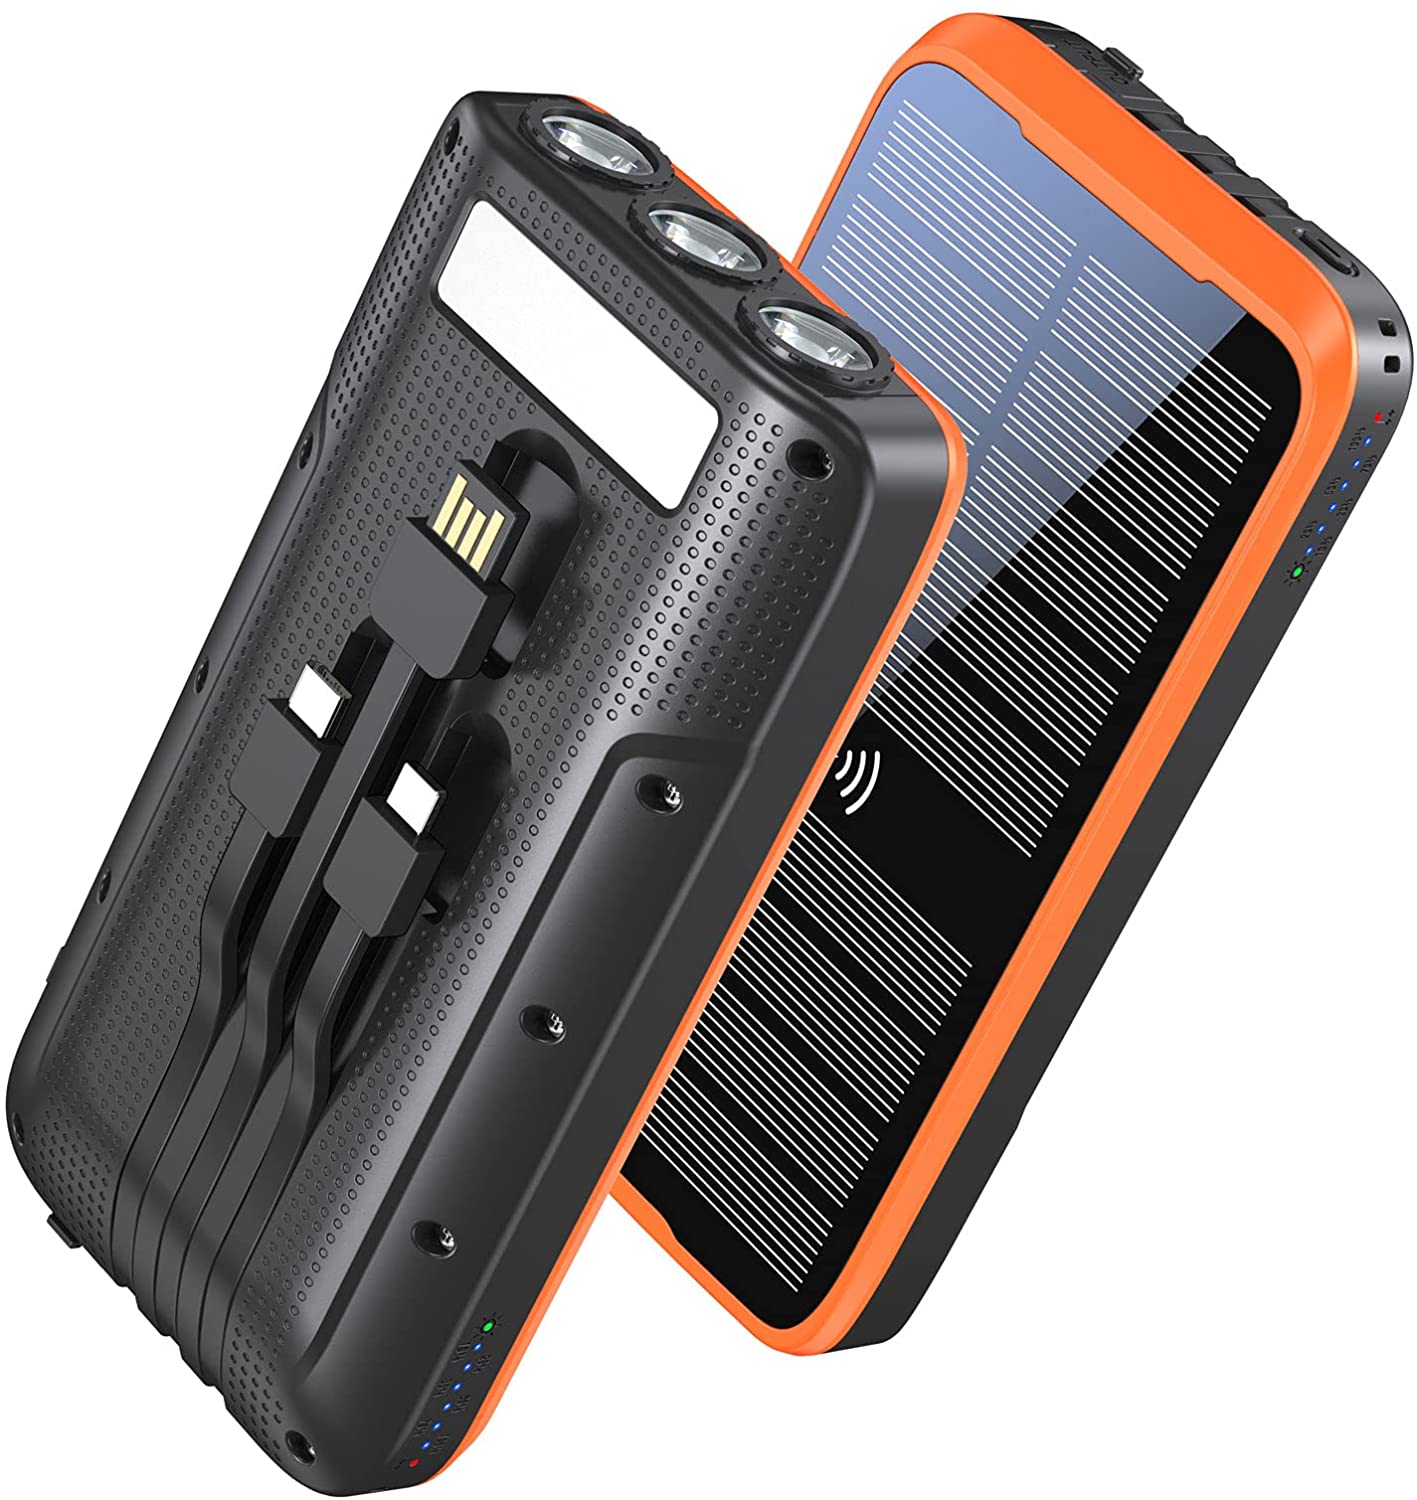 Cargador Solar Portátil con USB - Express Solutions